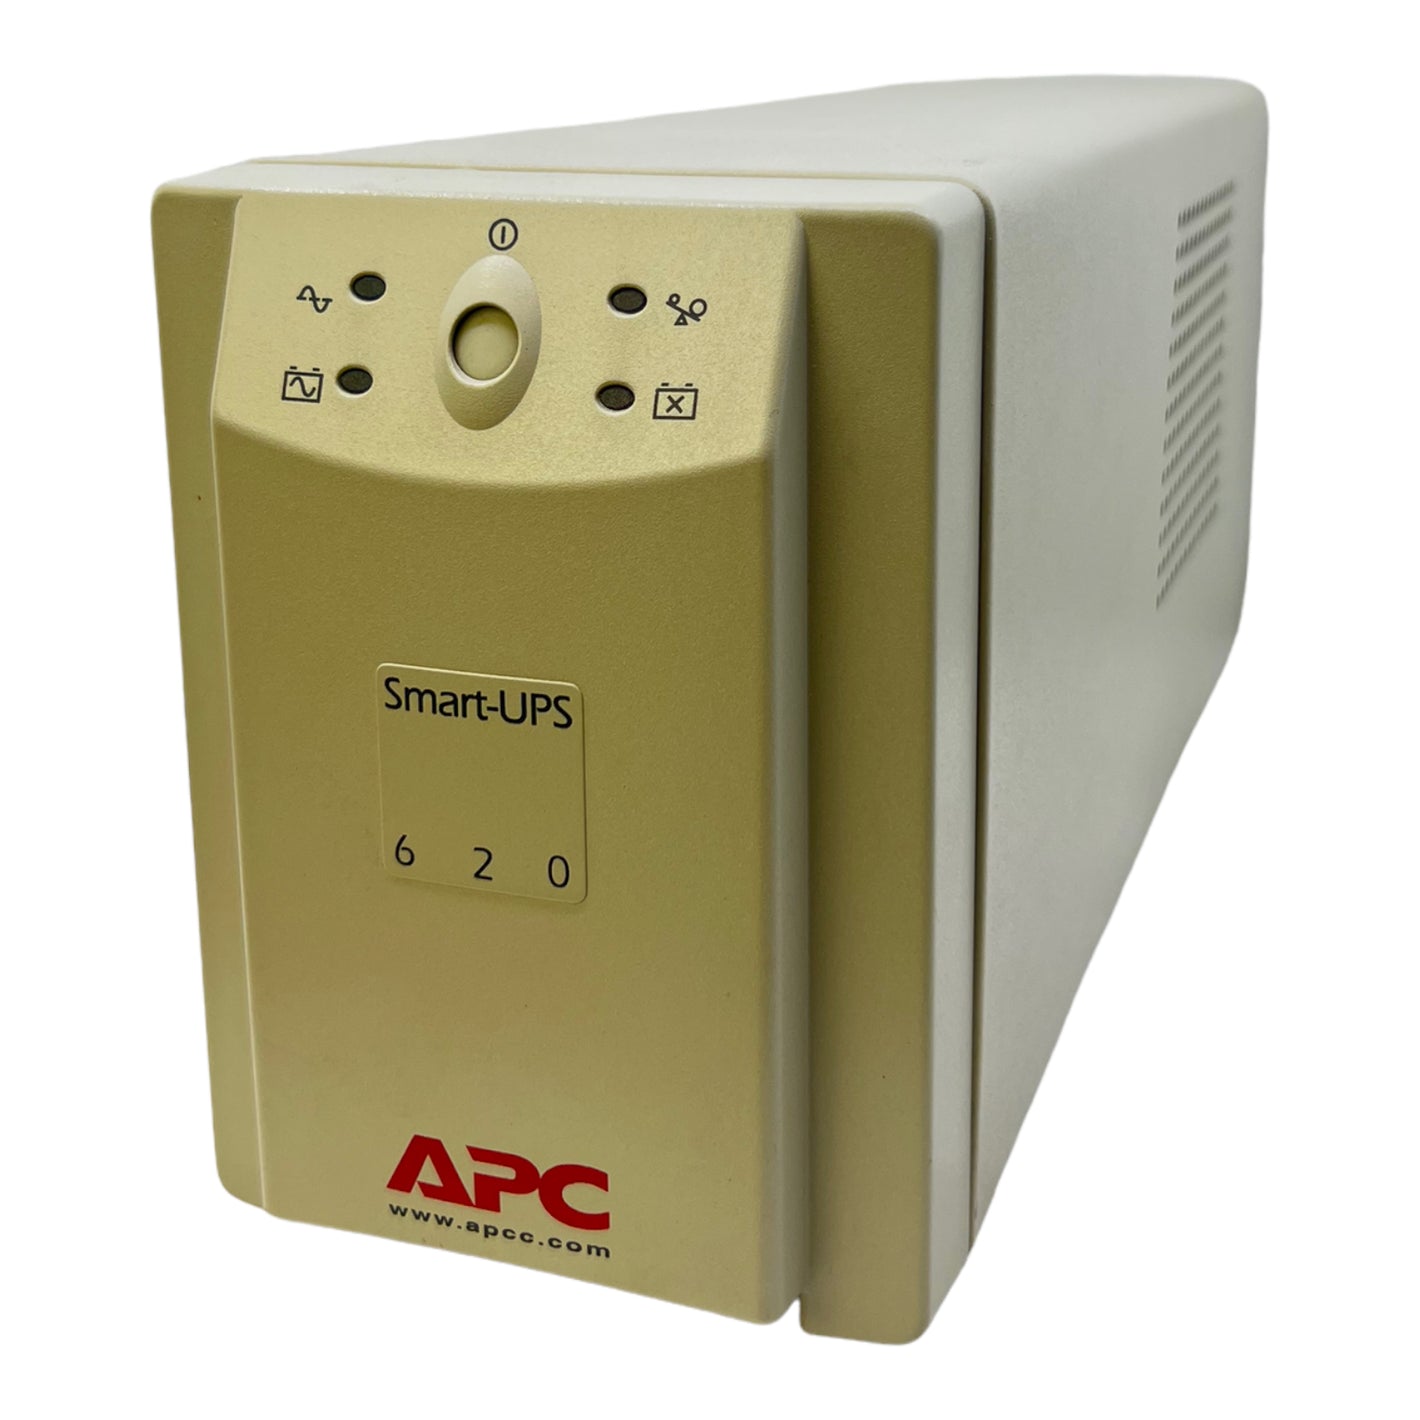 APC SU620INET Smart-UPS Emergency Power Backup 220-240V 5.3A 50/60Hz 